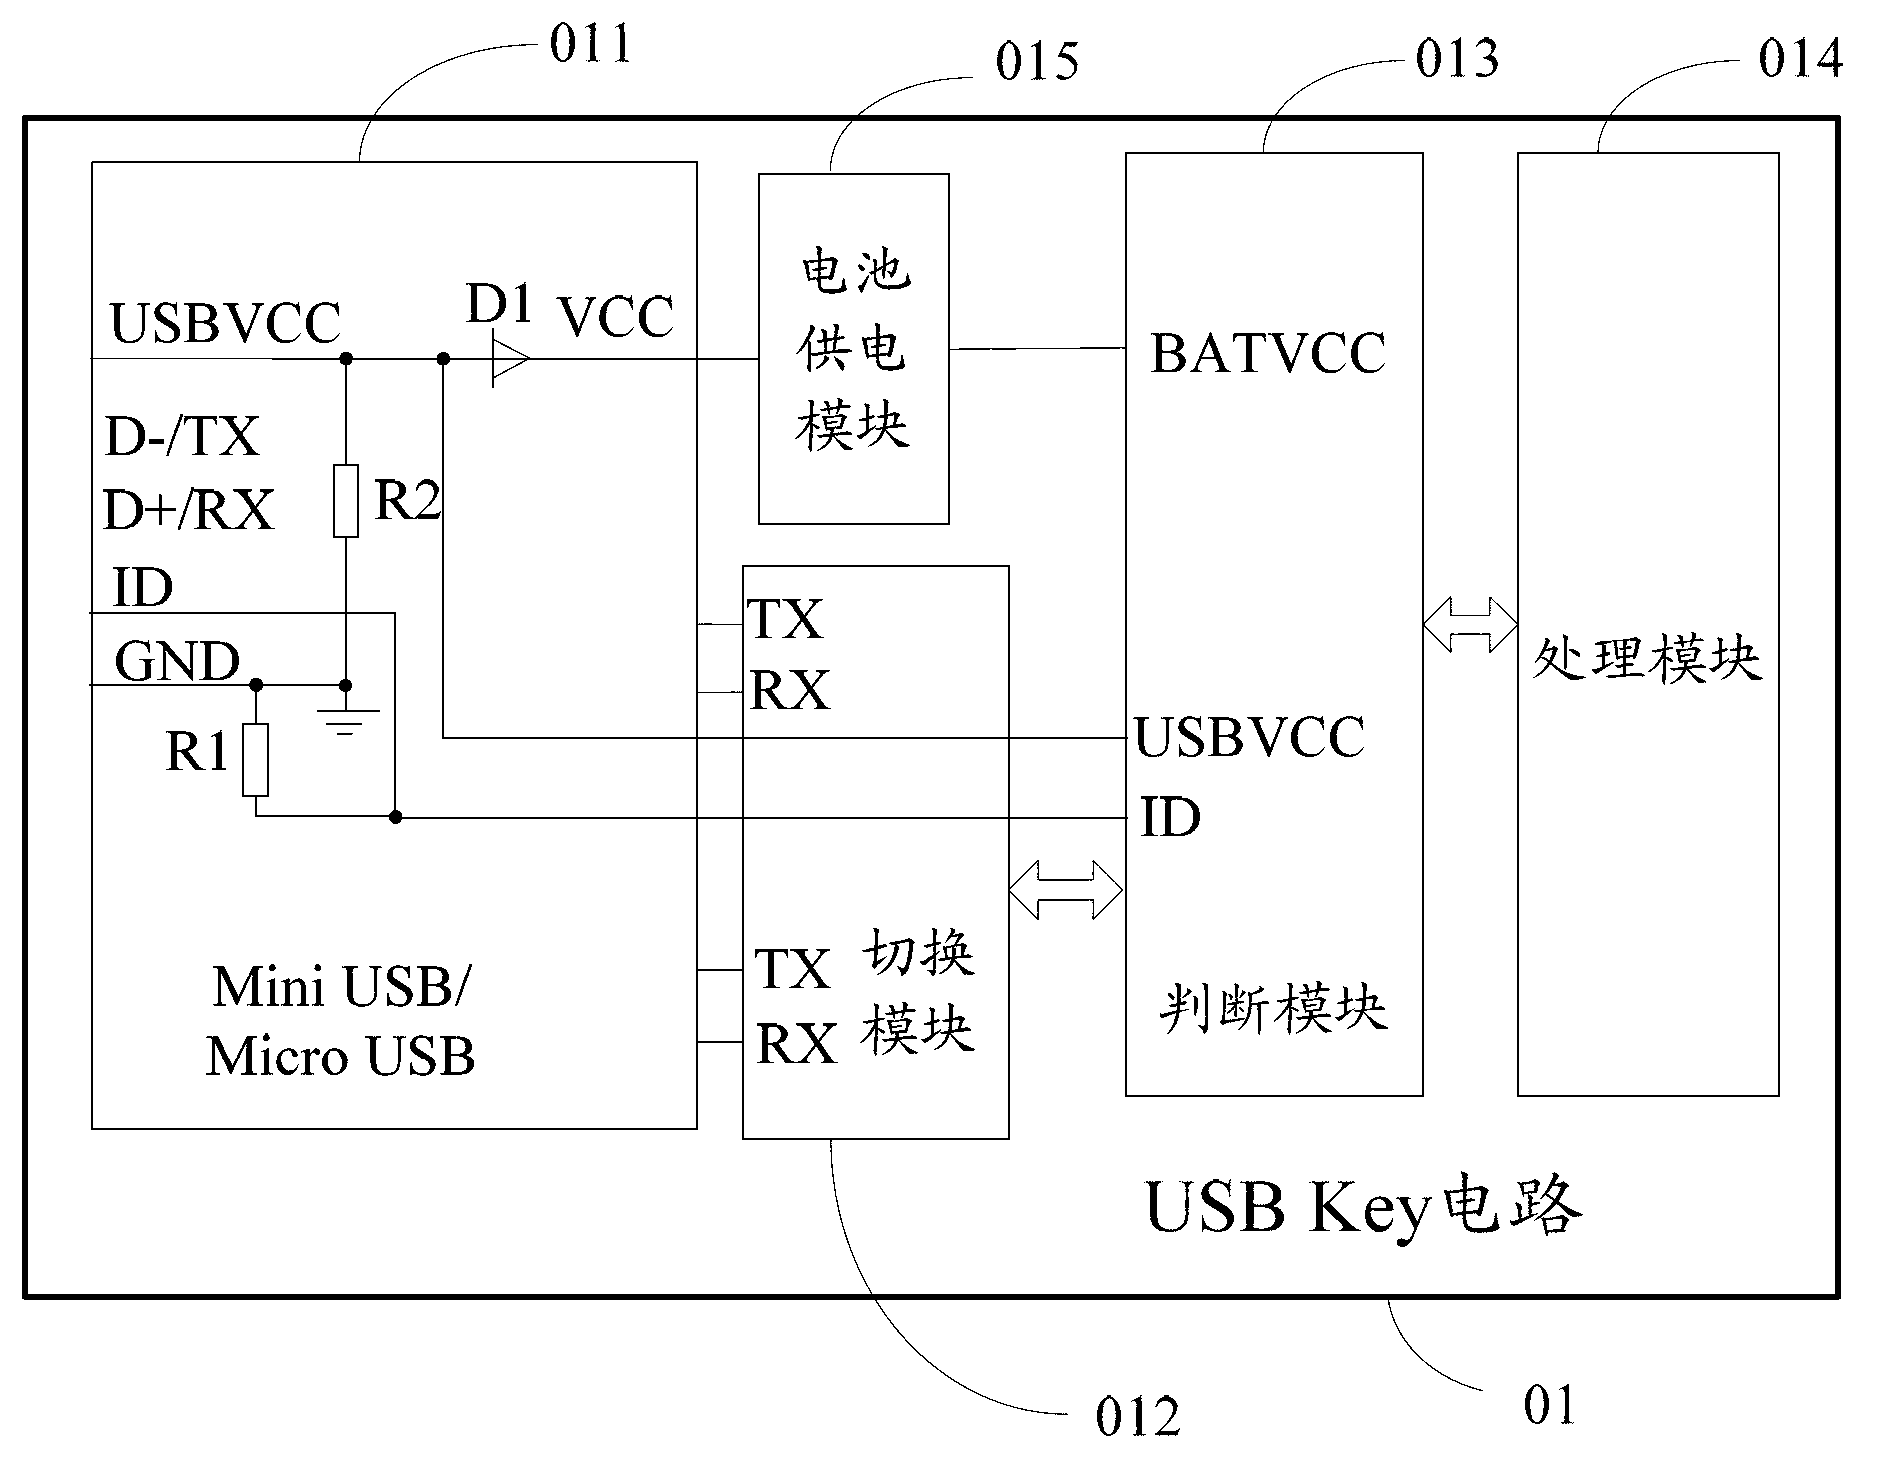 Interface system, switching method, USB key and UART terminal